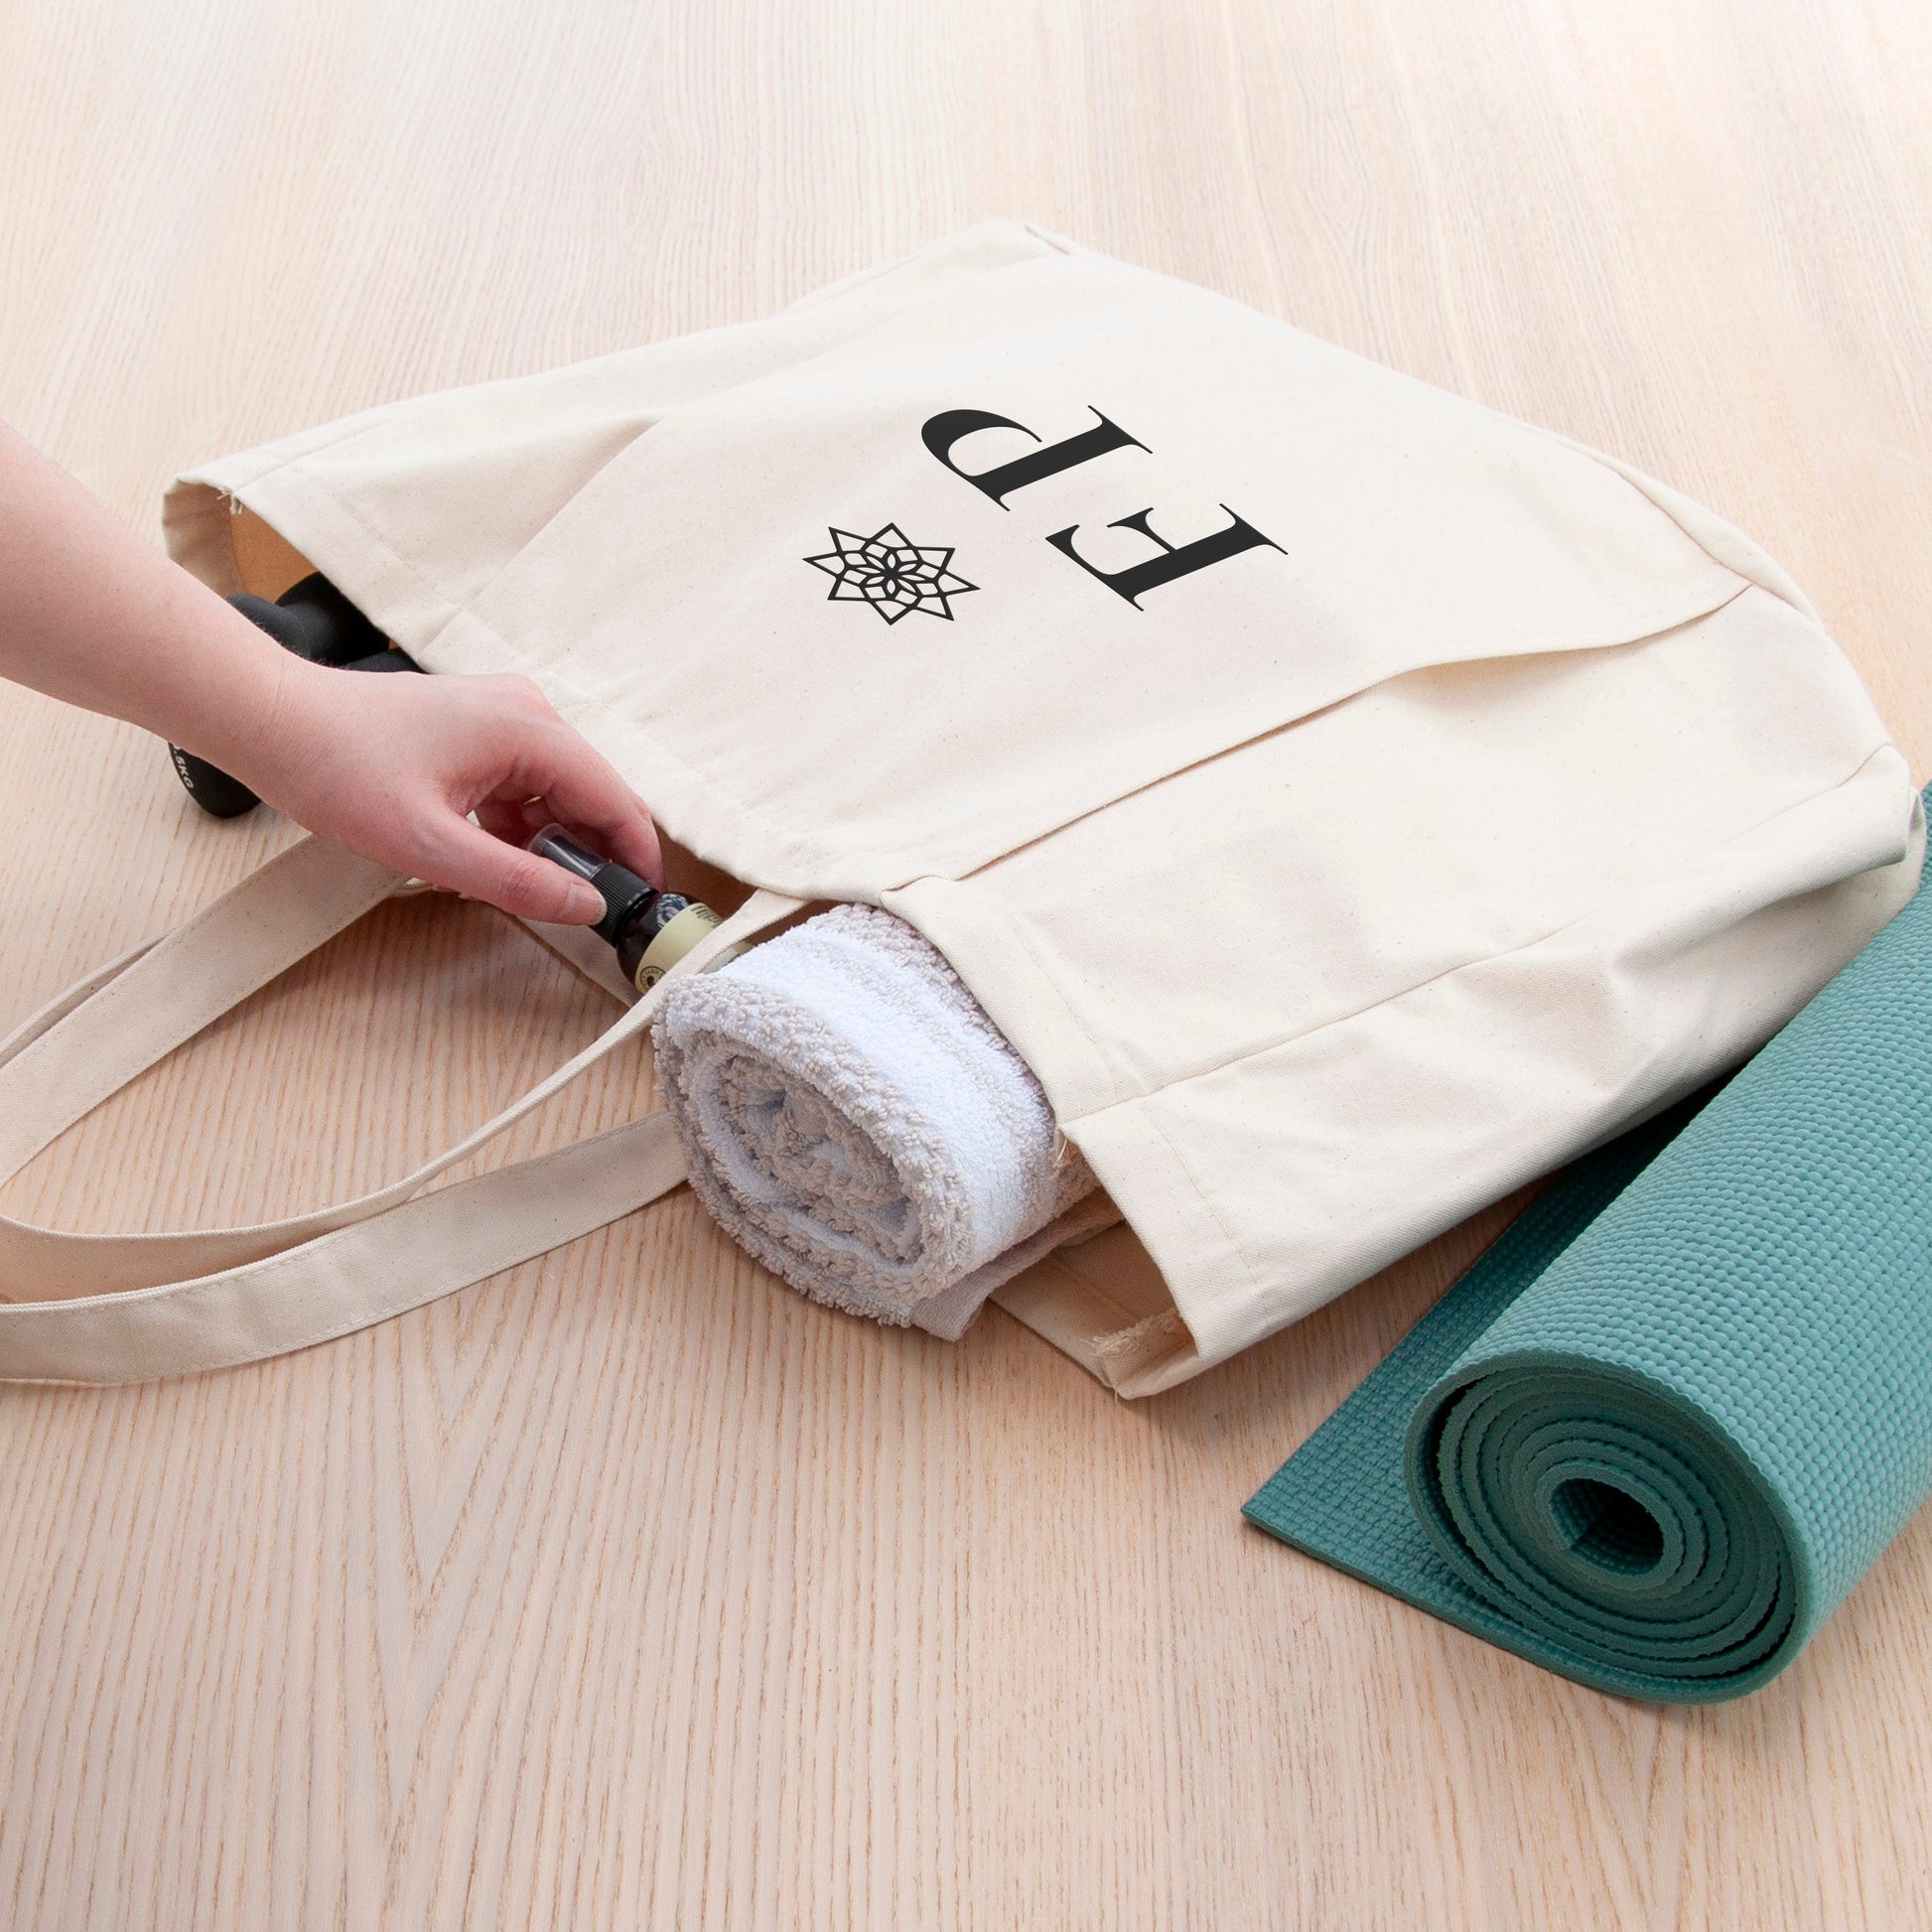 Personalized Tote Bags - Monogrammed Organic Yoga Tote Bag 